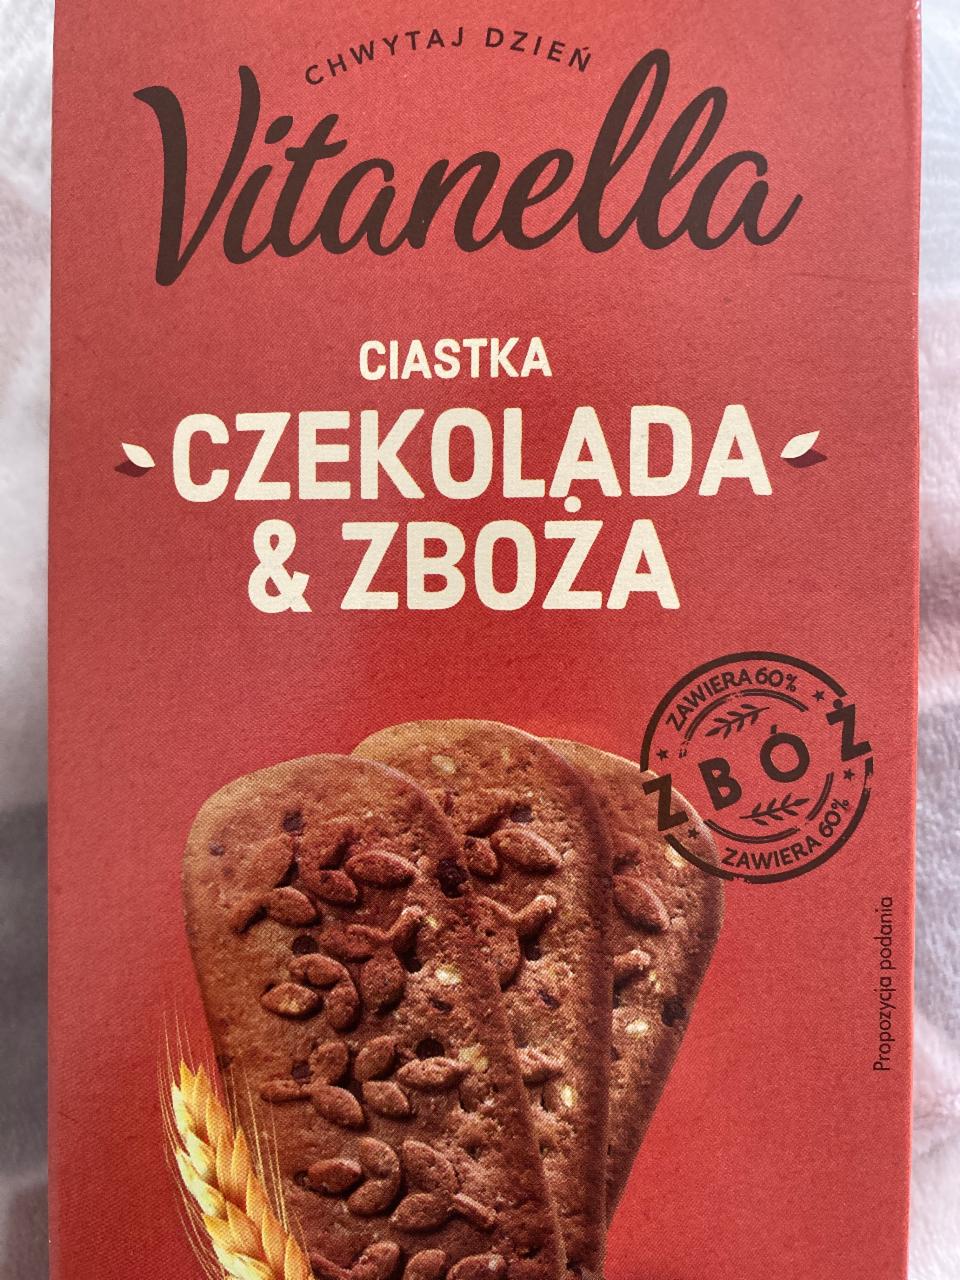 Fotografie - Ciastka czekolada & zboża Vitanella